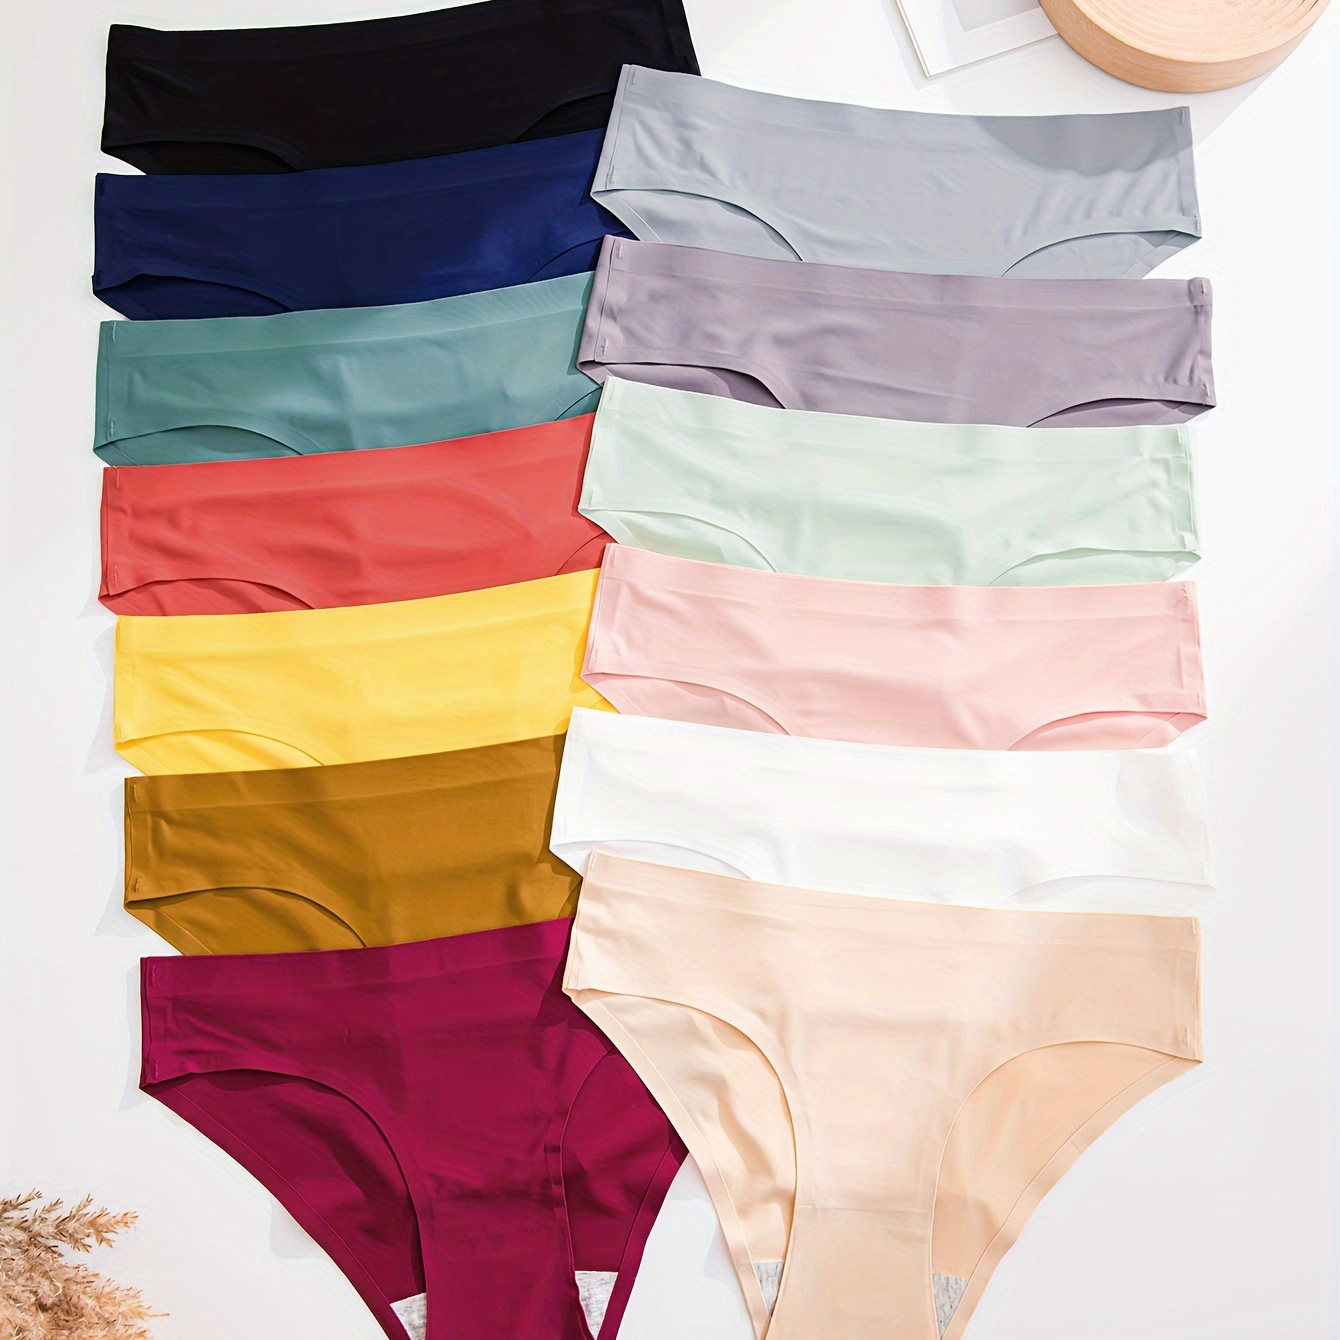 

13pcs Solid Seamless Low Waist Briefs, Soft & Comfy Stretchy Panties, Women's Lingerie & Underwear